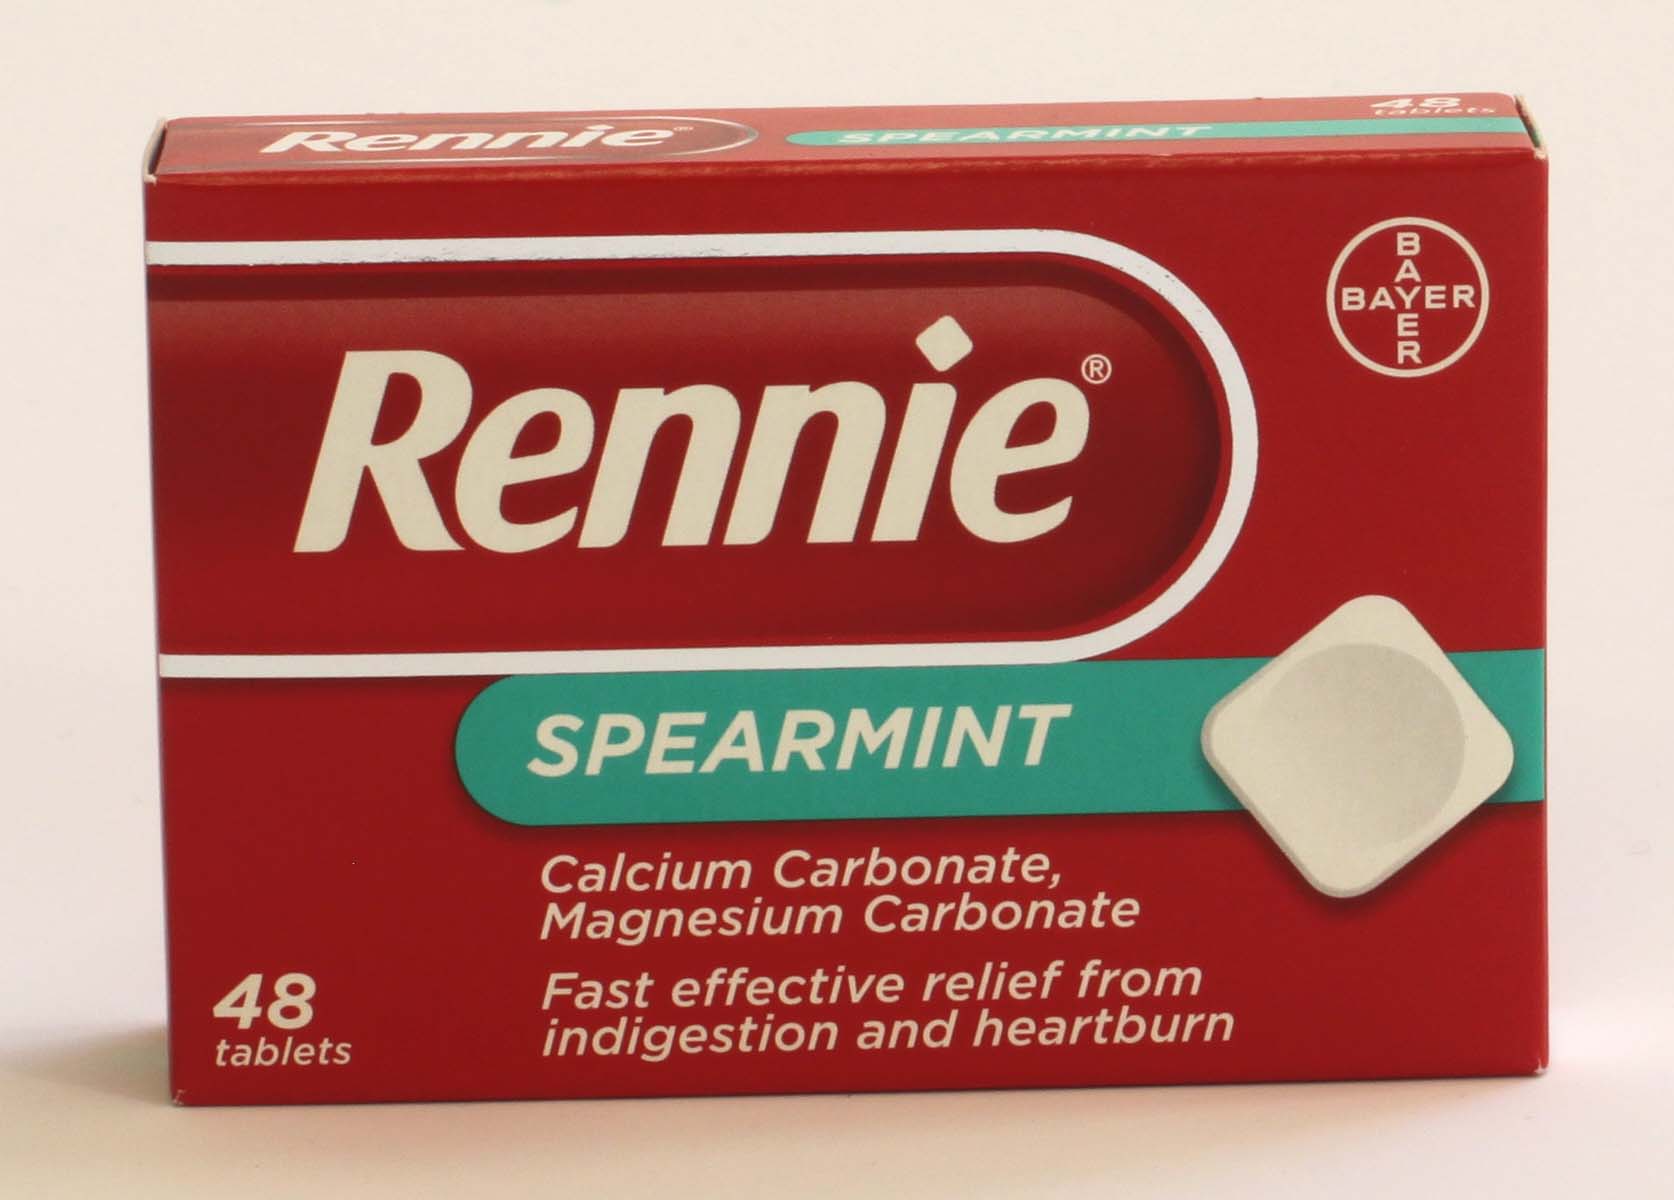 Rennie Spearmint - 48 tablets